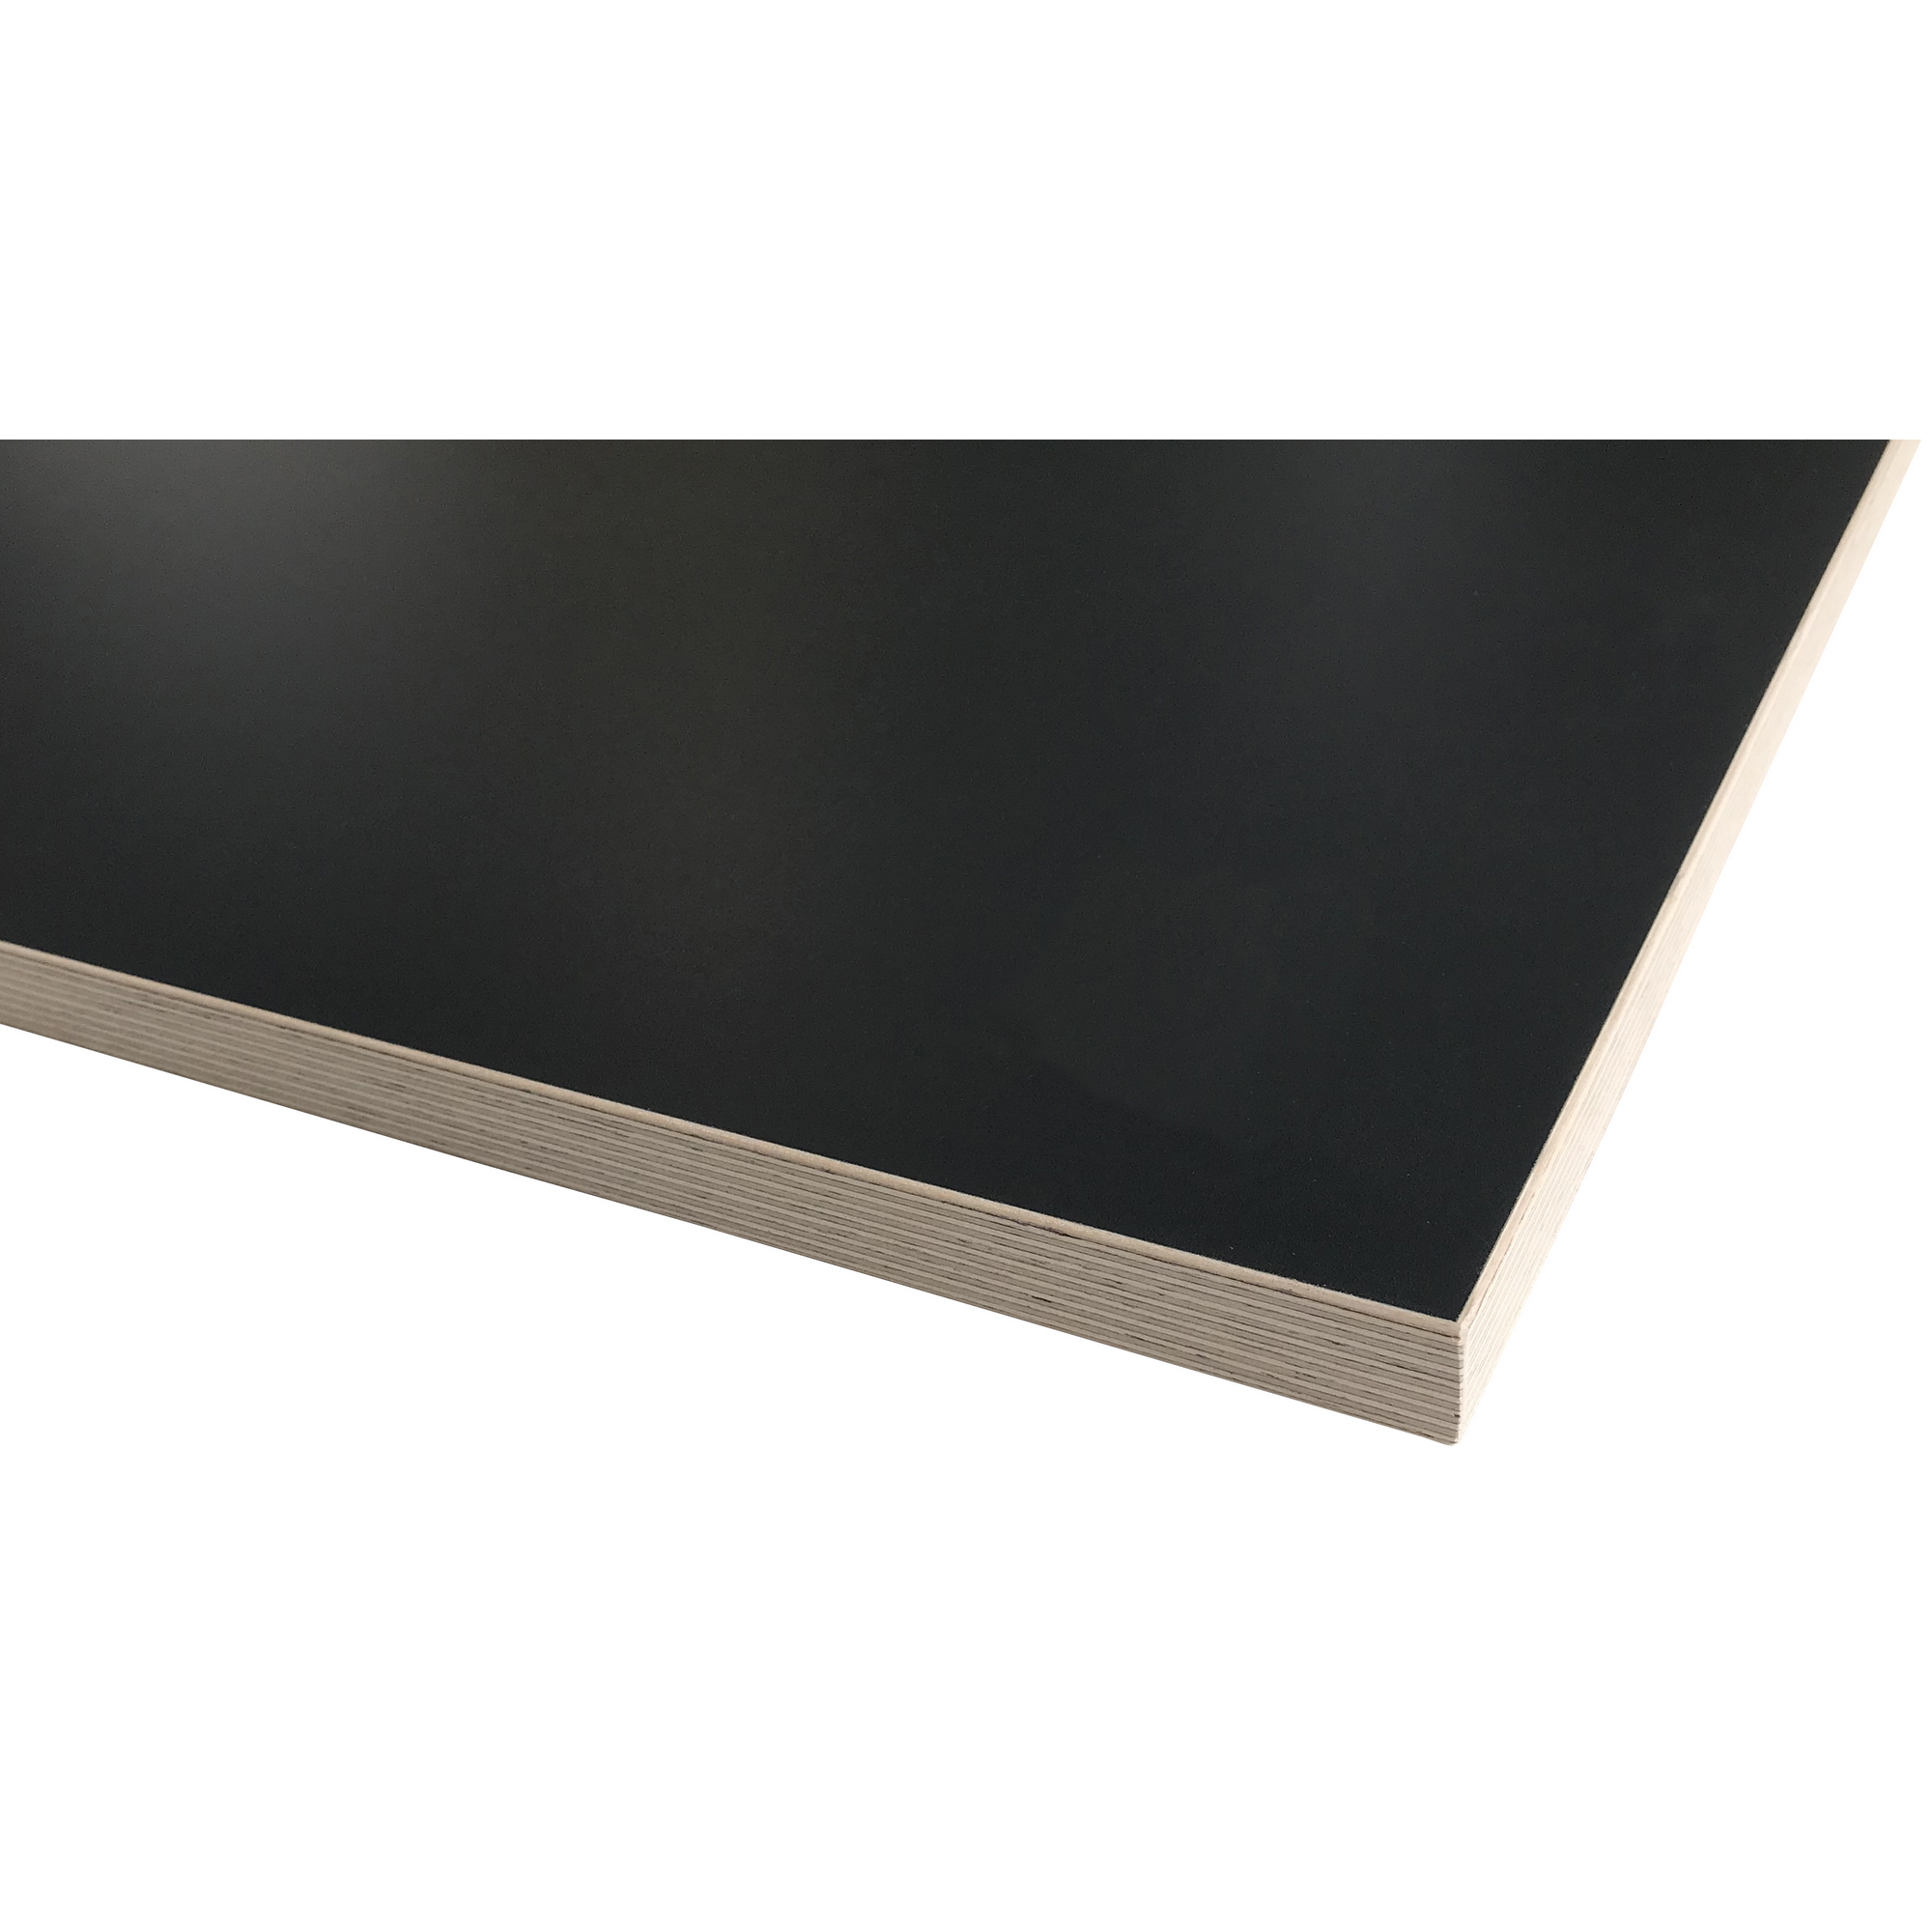 Tischplatte Dekorspan anthrazit 200 x 100 x 2,5 cm + product picture